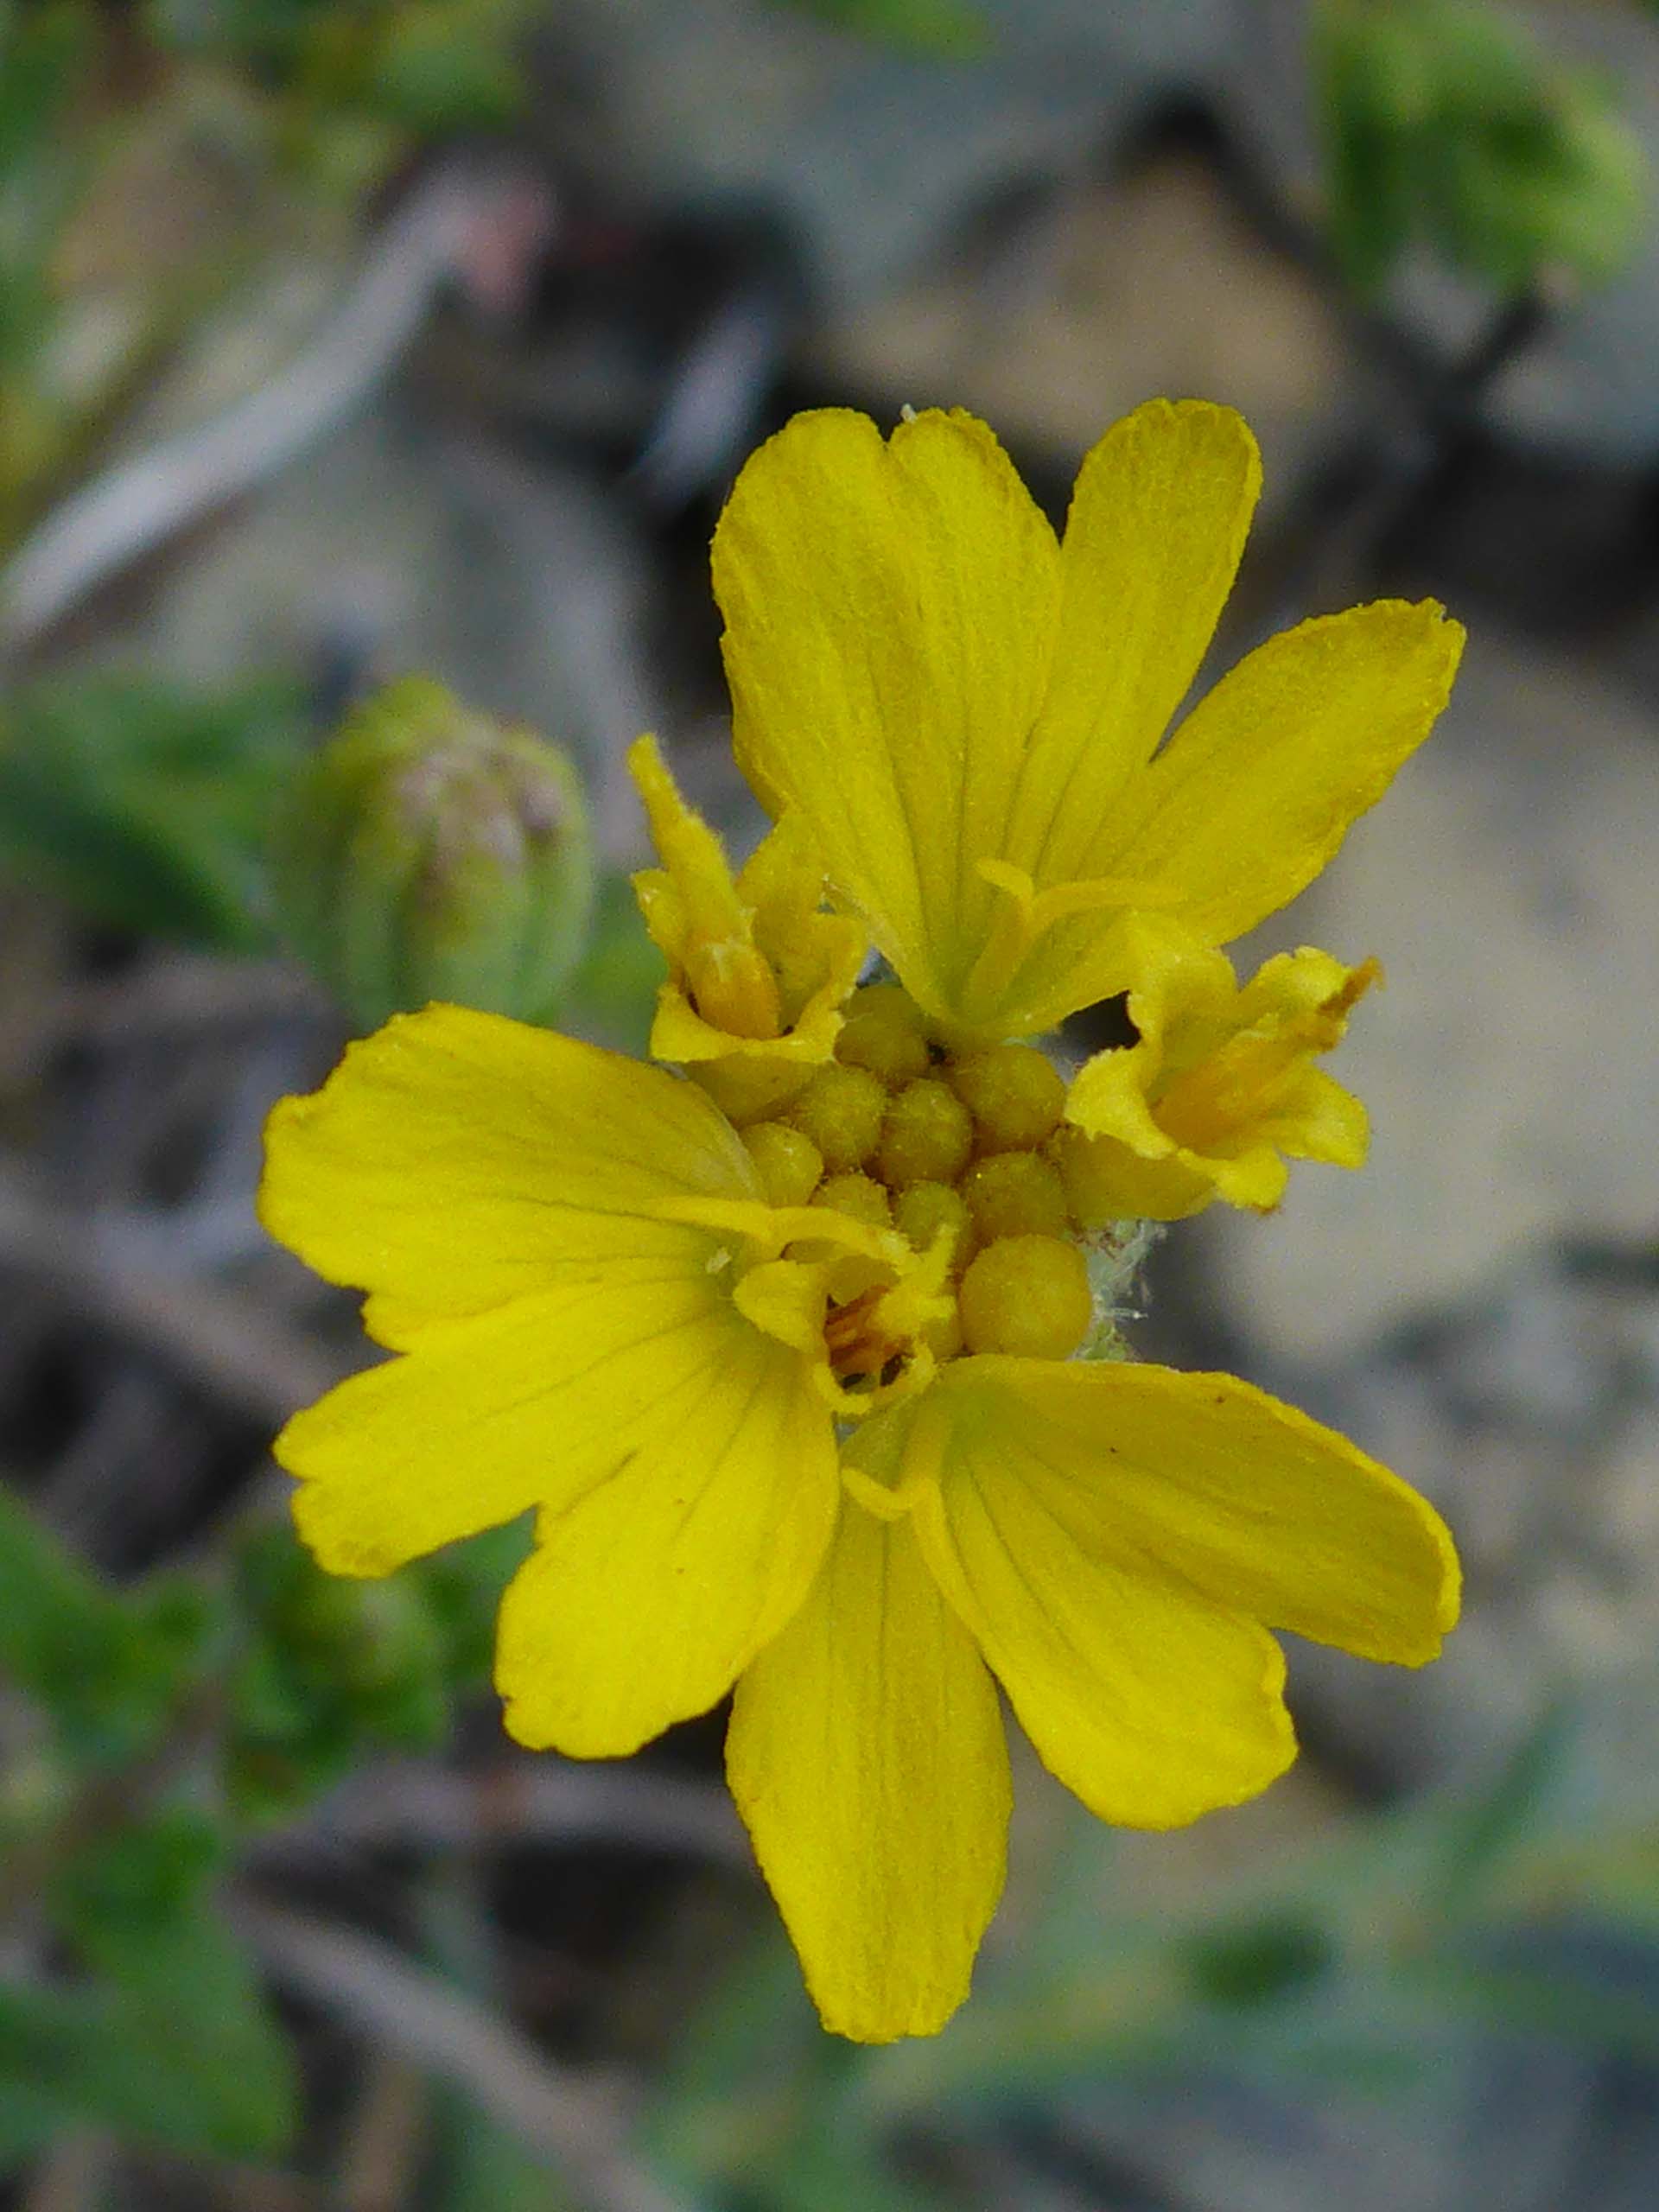 Scabrid alpine tarplant flower close-up. D. Burk.